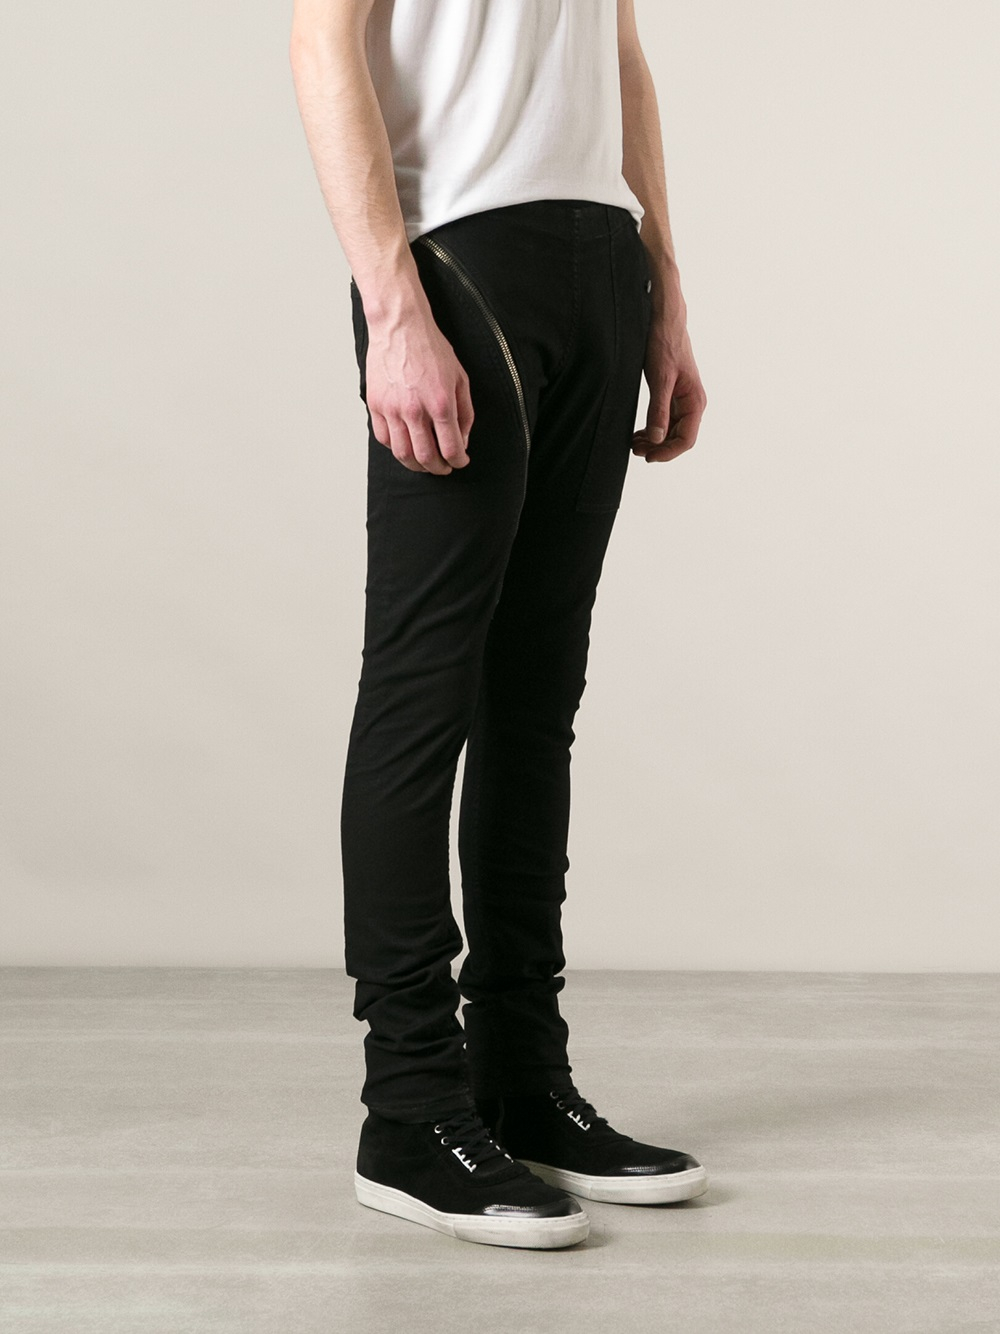 Rick Owens DRKSHDW Aircut Jeans in Black for Men - Lyst